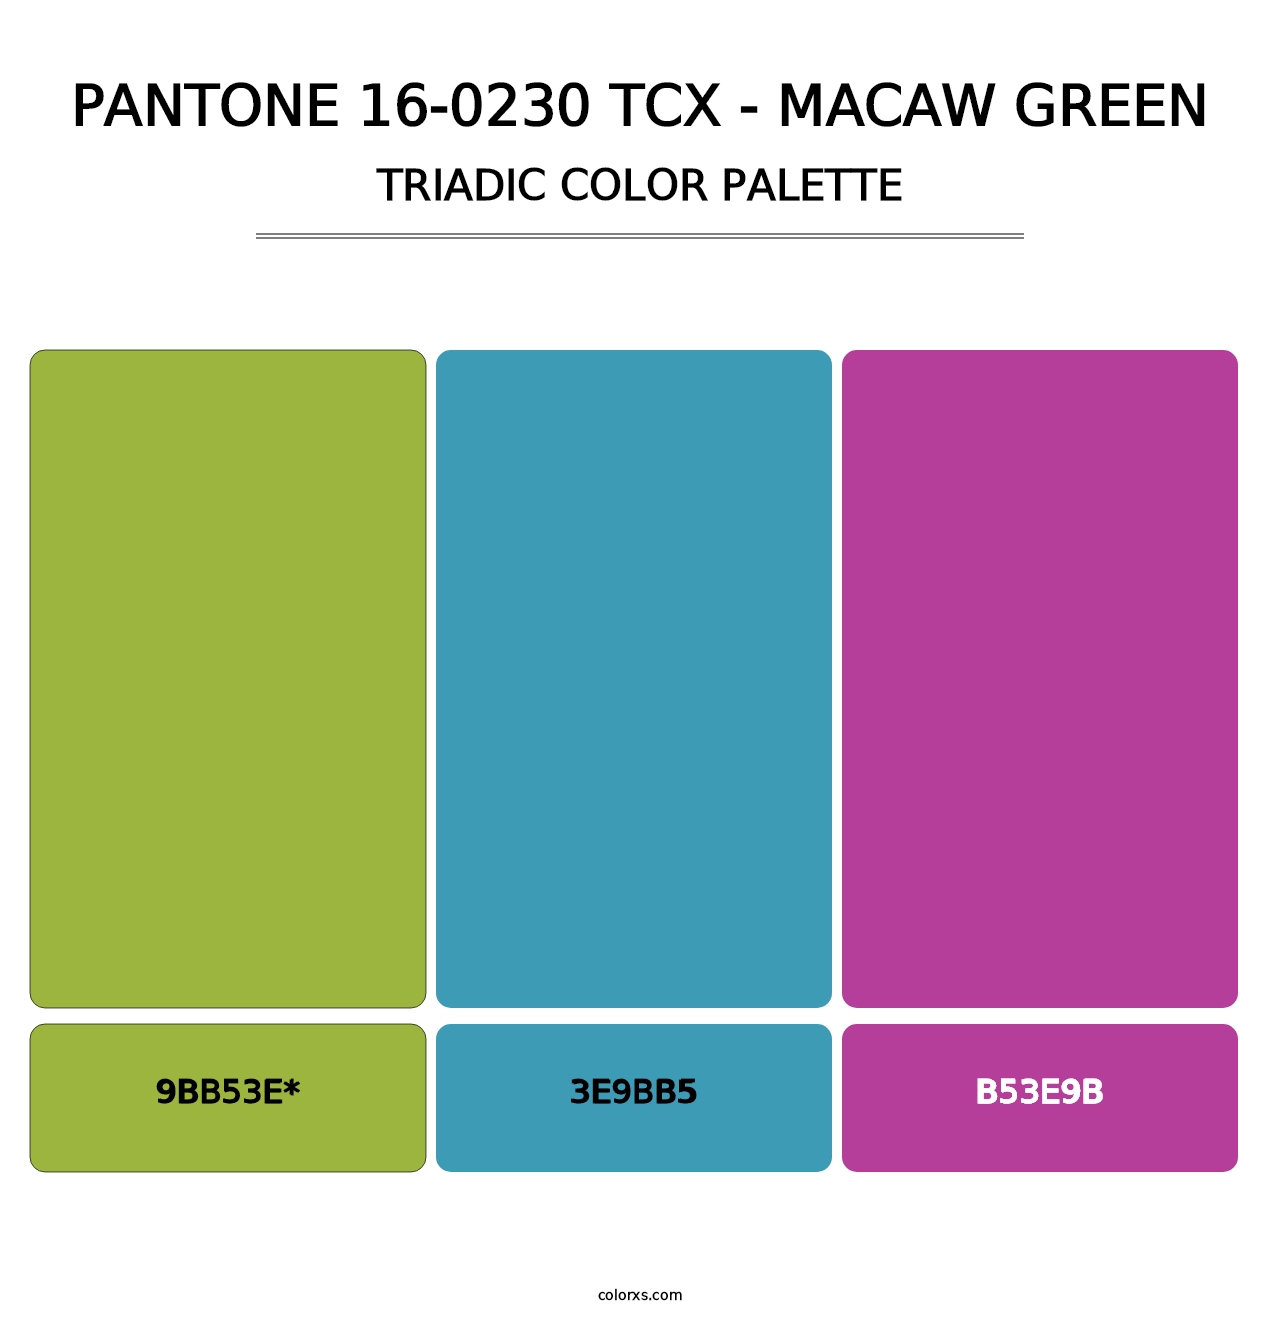 PANTONE 16-0230 TCX - Macaw Green - Triadic Color Palette